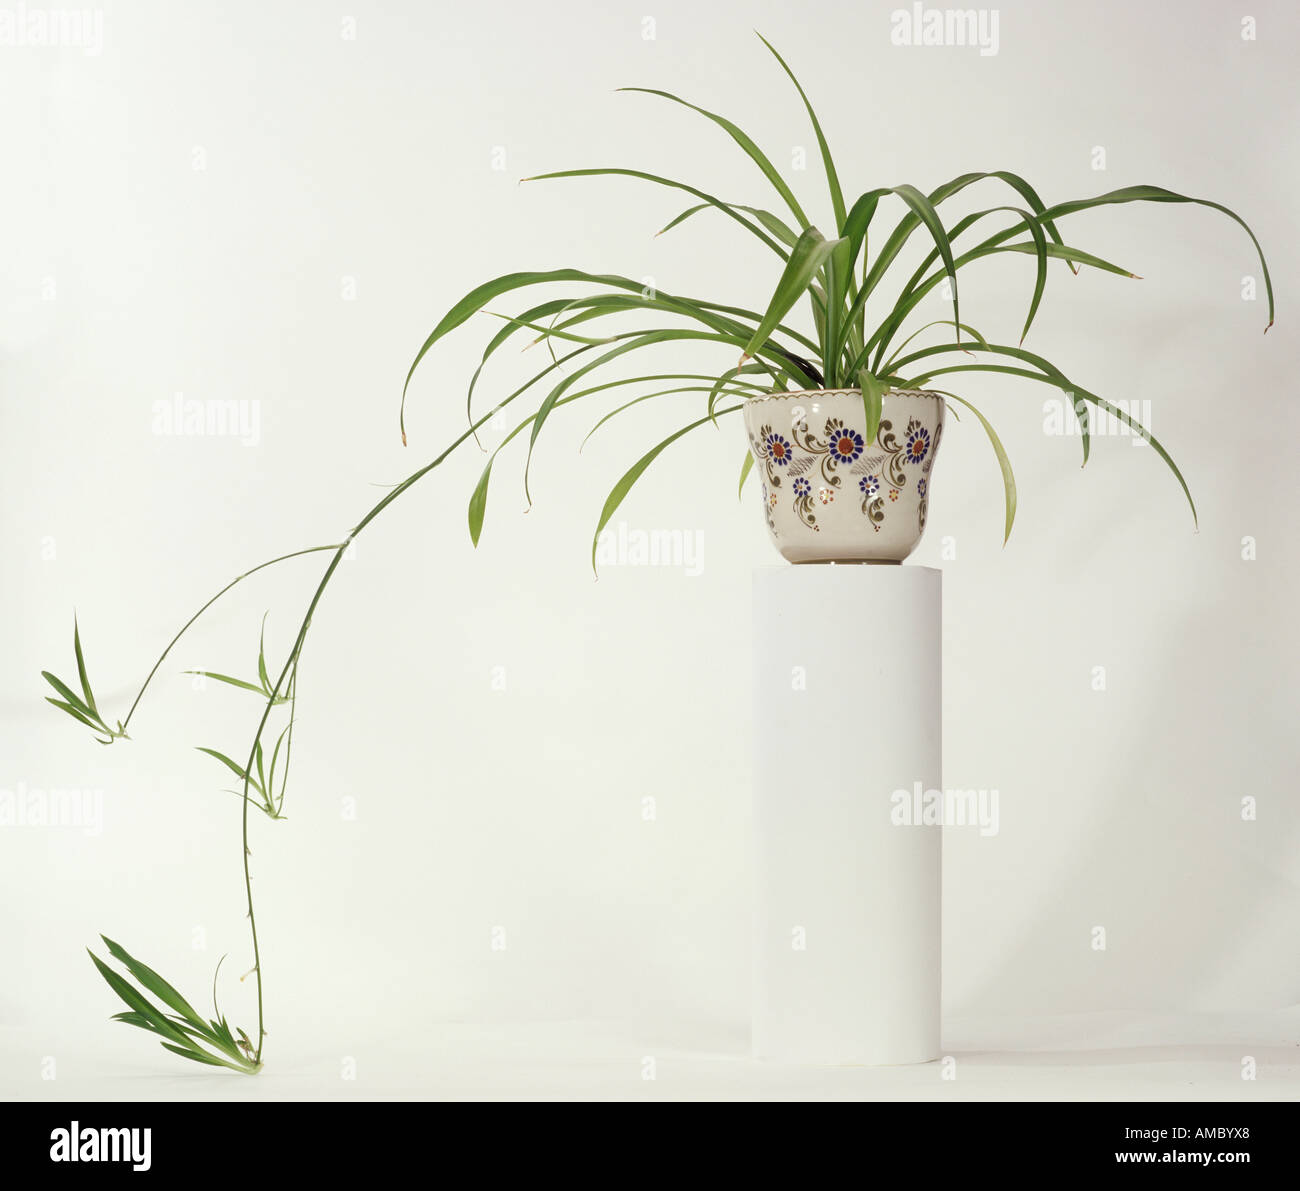 Spide plant / Chlorophytum comosum Stock Photo